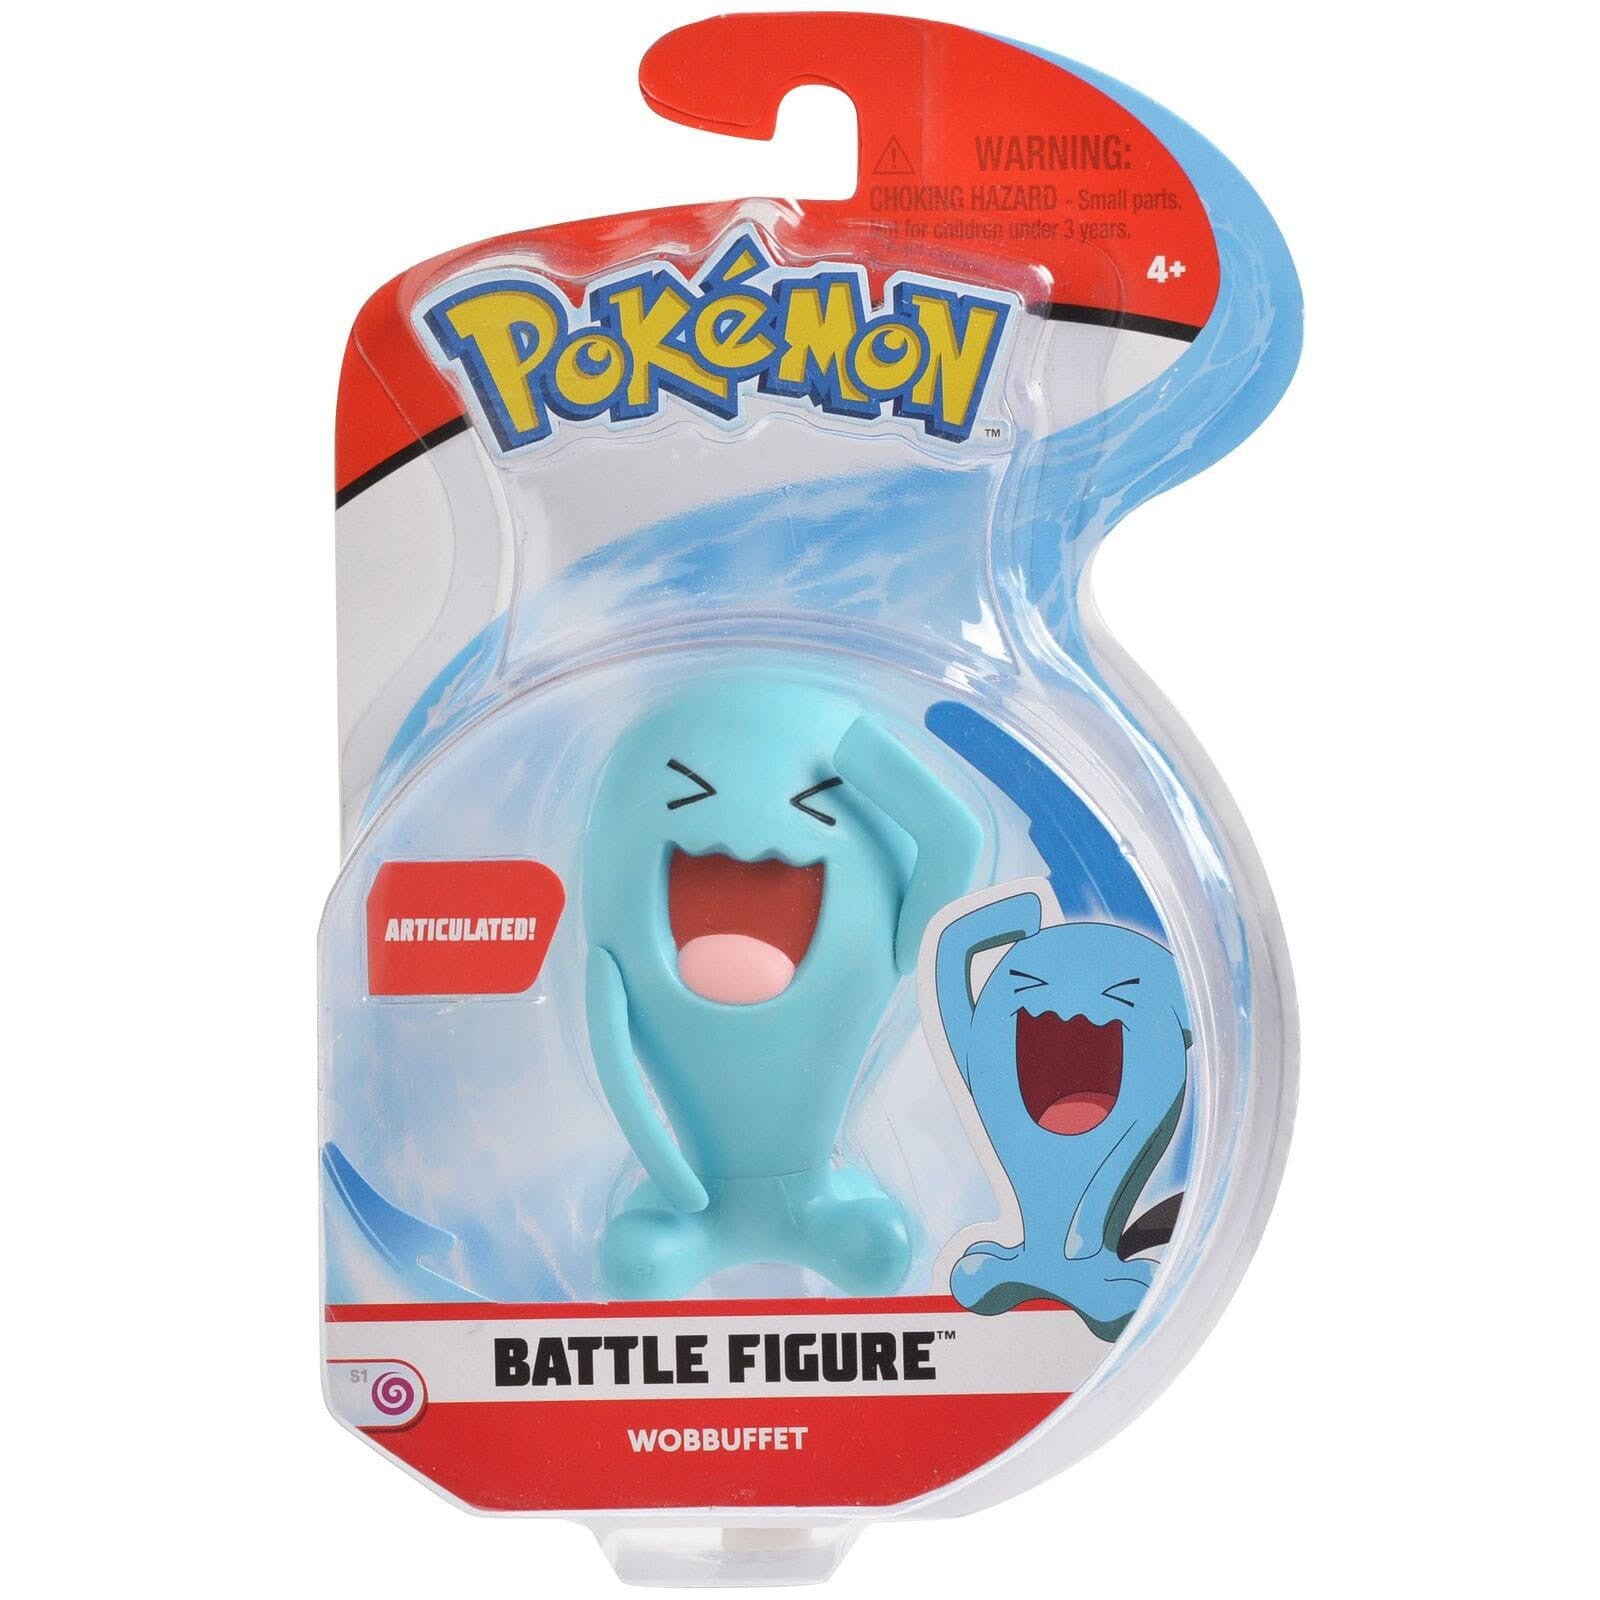 Pokemon - Battle Figure Pack Minifiguren Sortiment 5 cm, Spielfigur, Actionfigur